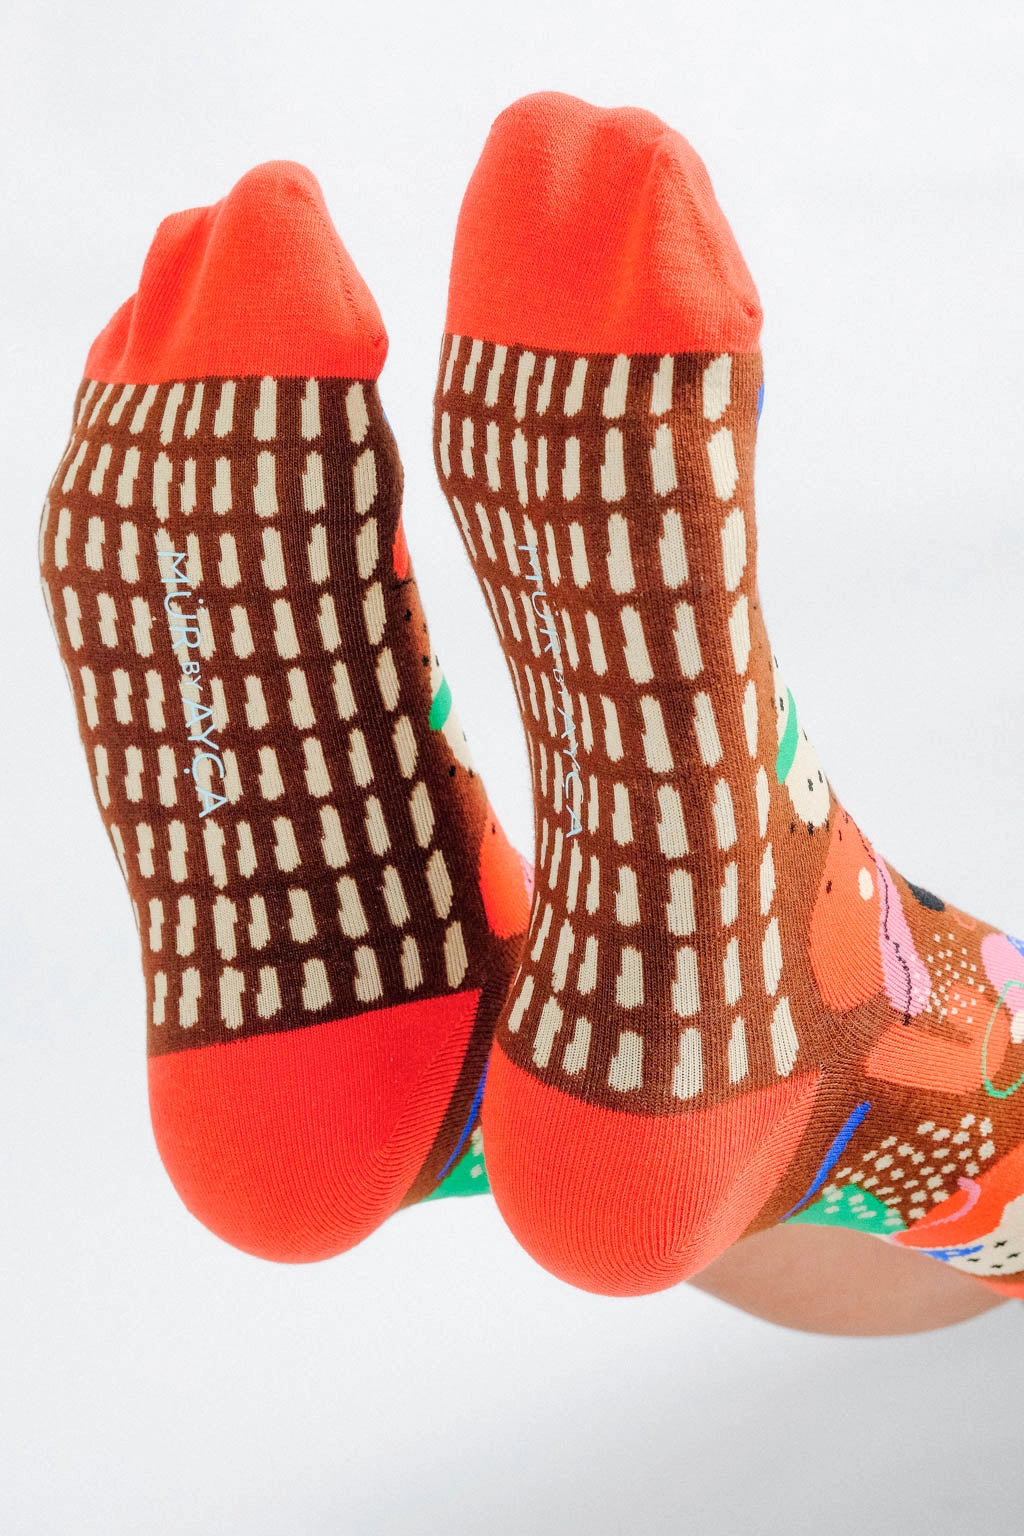 Matisse Ankle Socks by Mür by Ayca